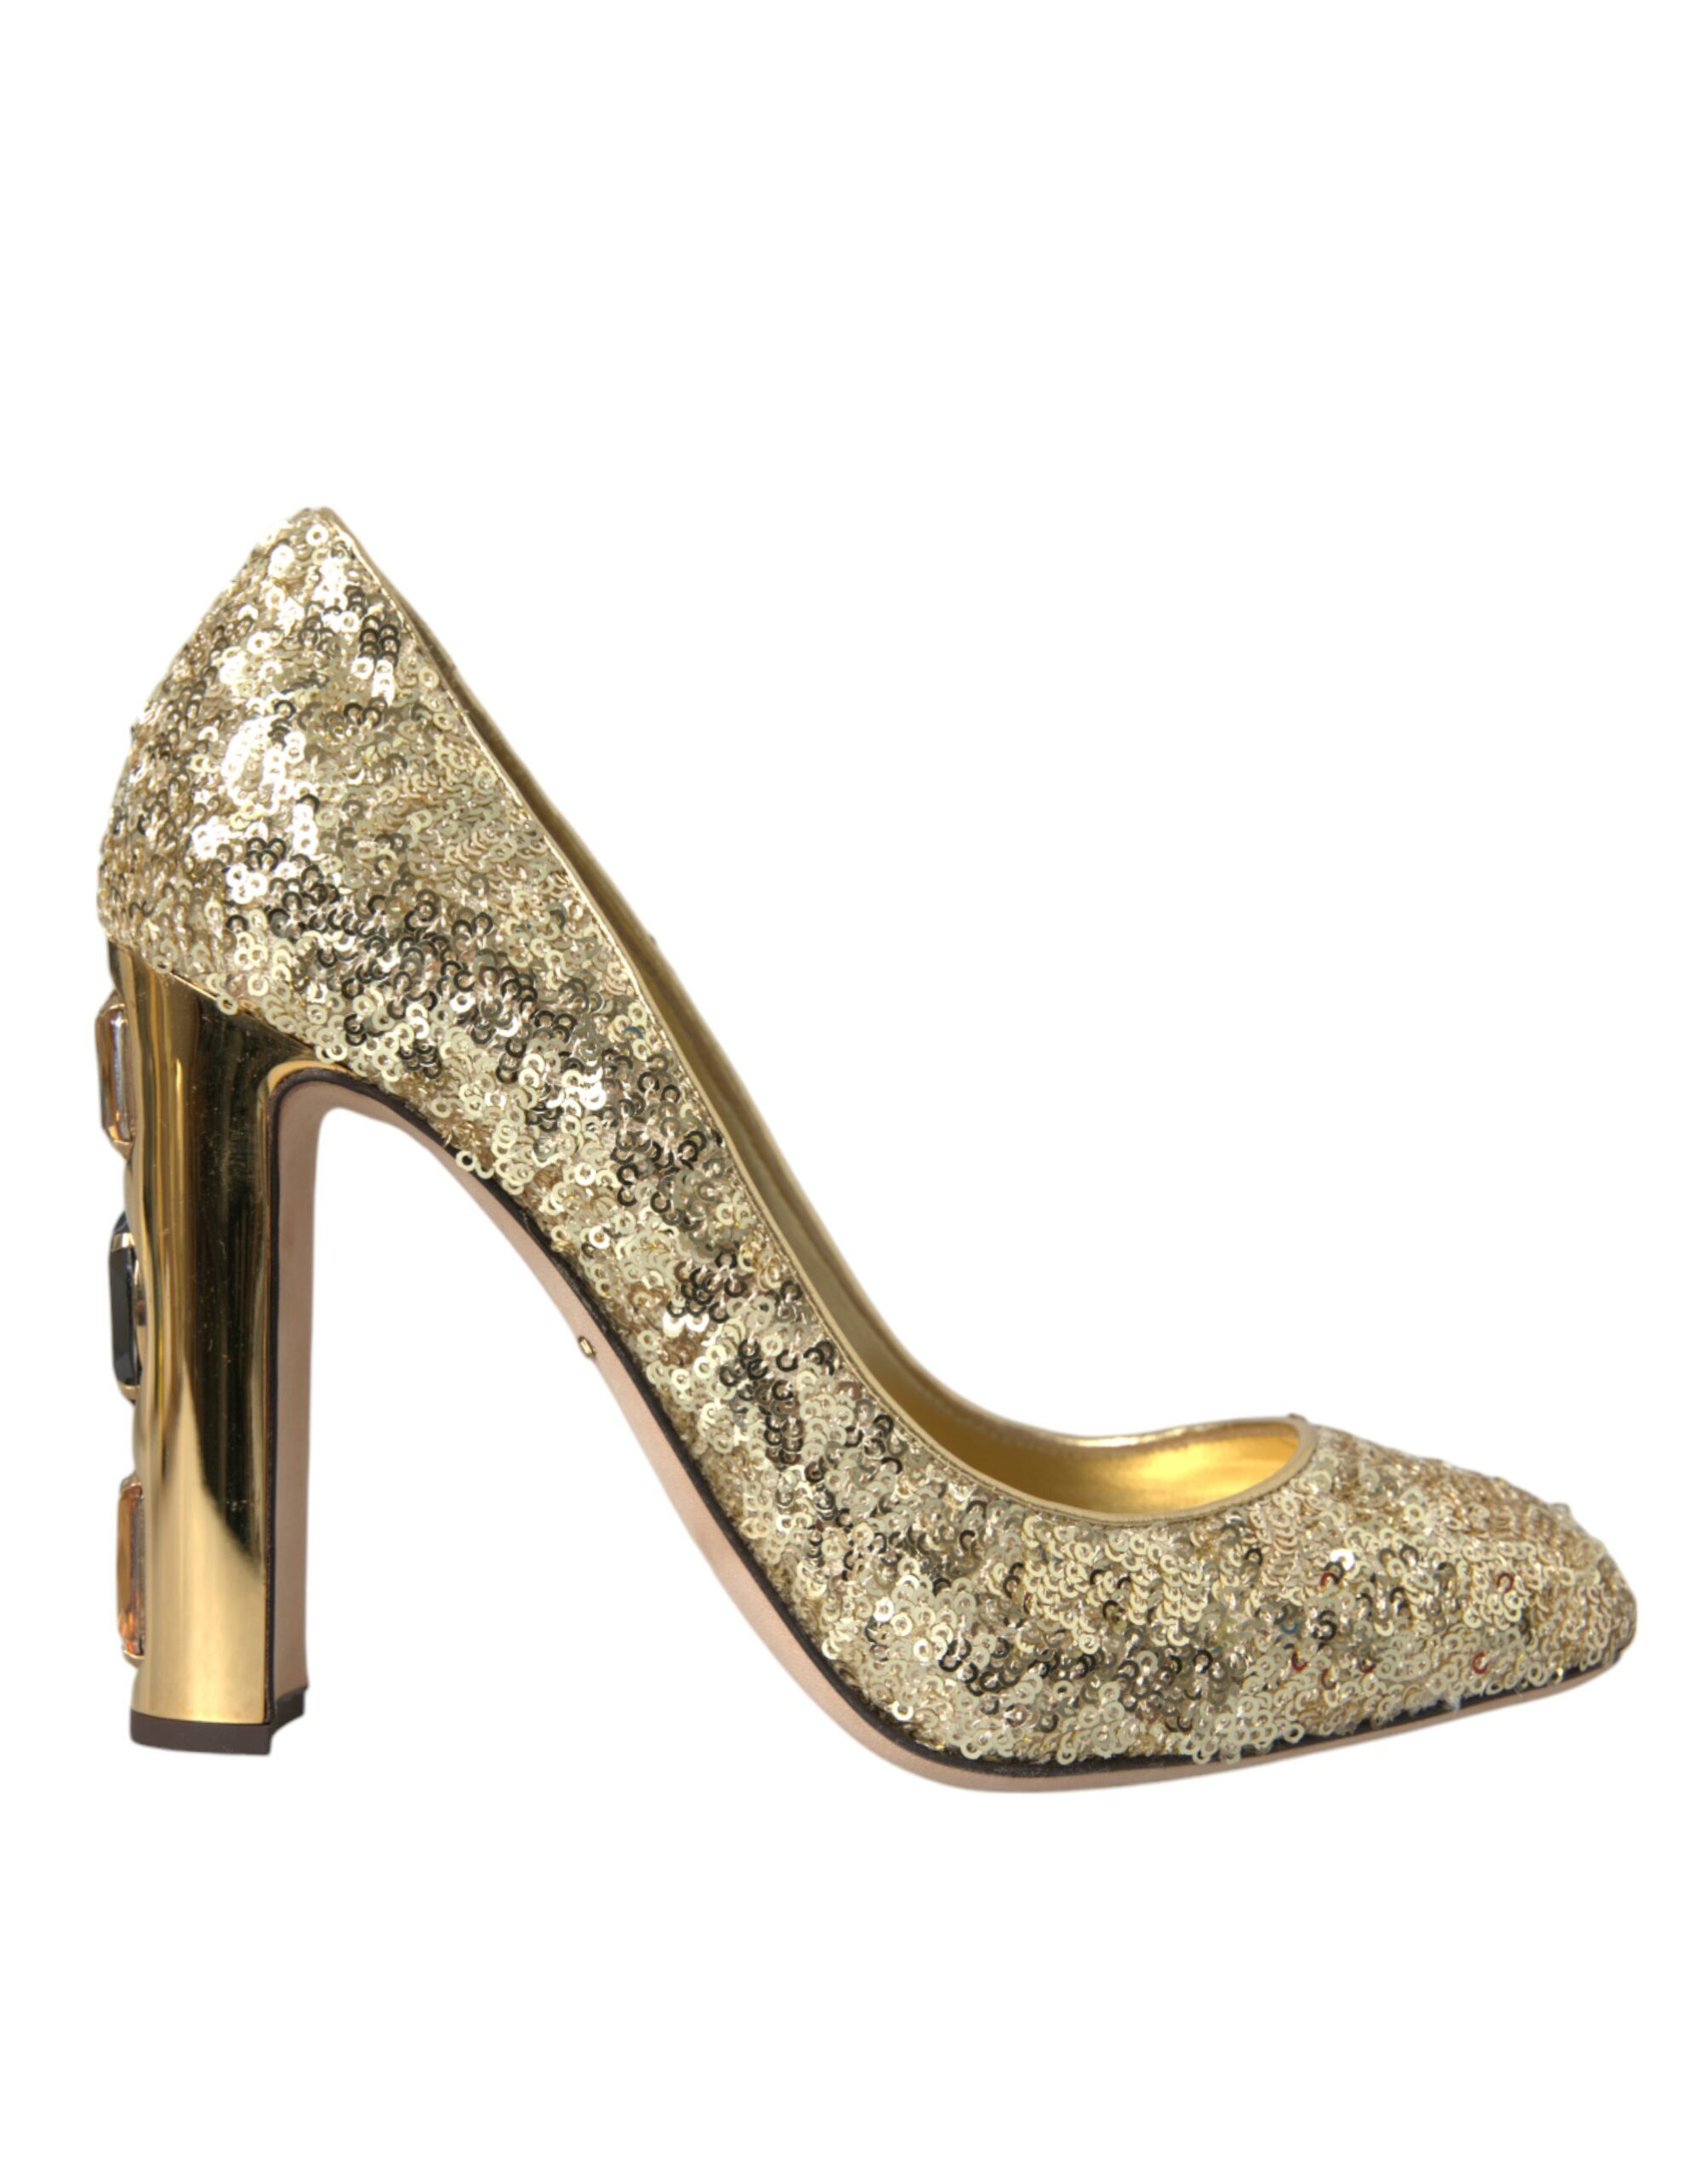 Dolce & Gabbana Gold Sequin Crystal Heels Pumps Shoes EU38.5/US8 Gold